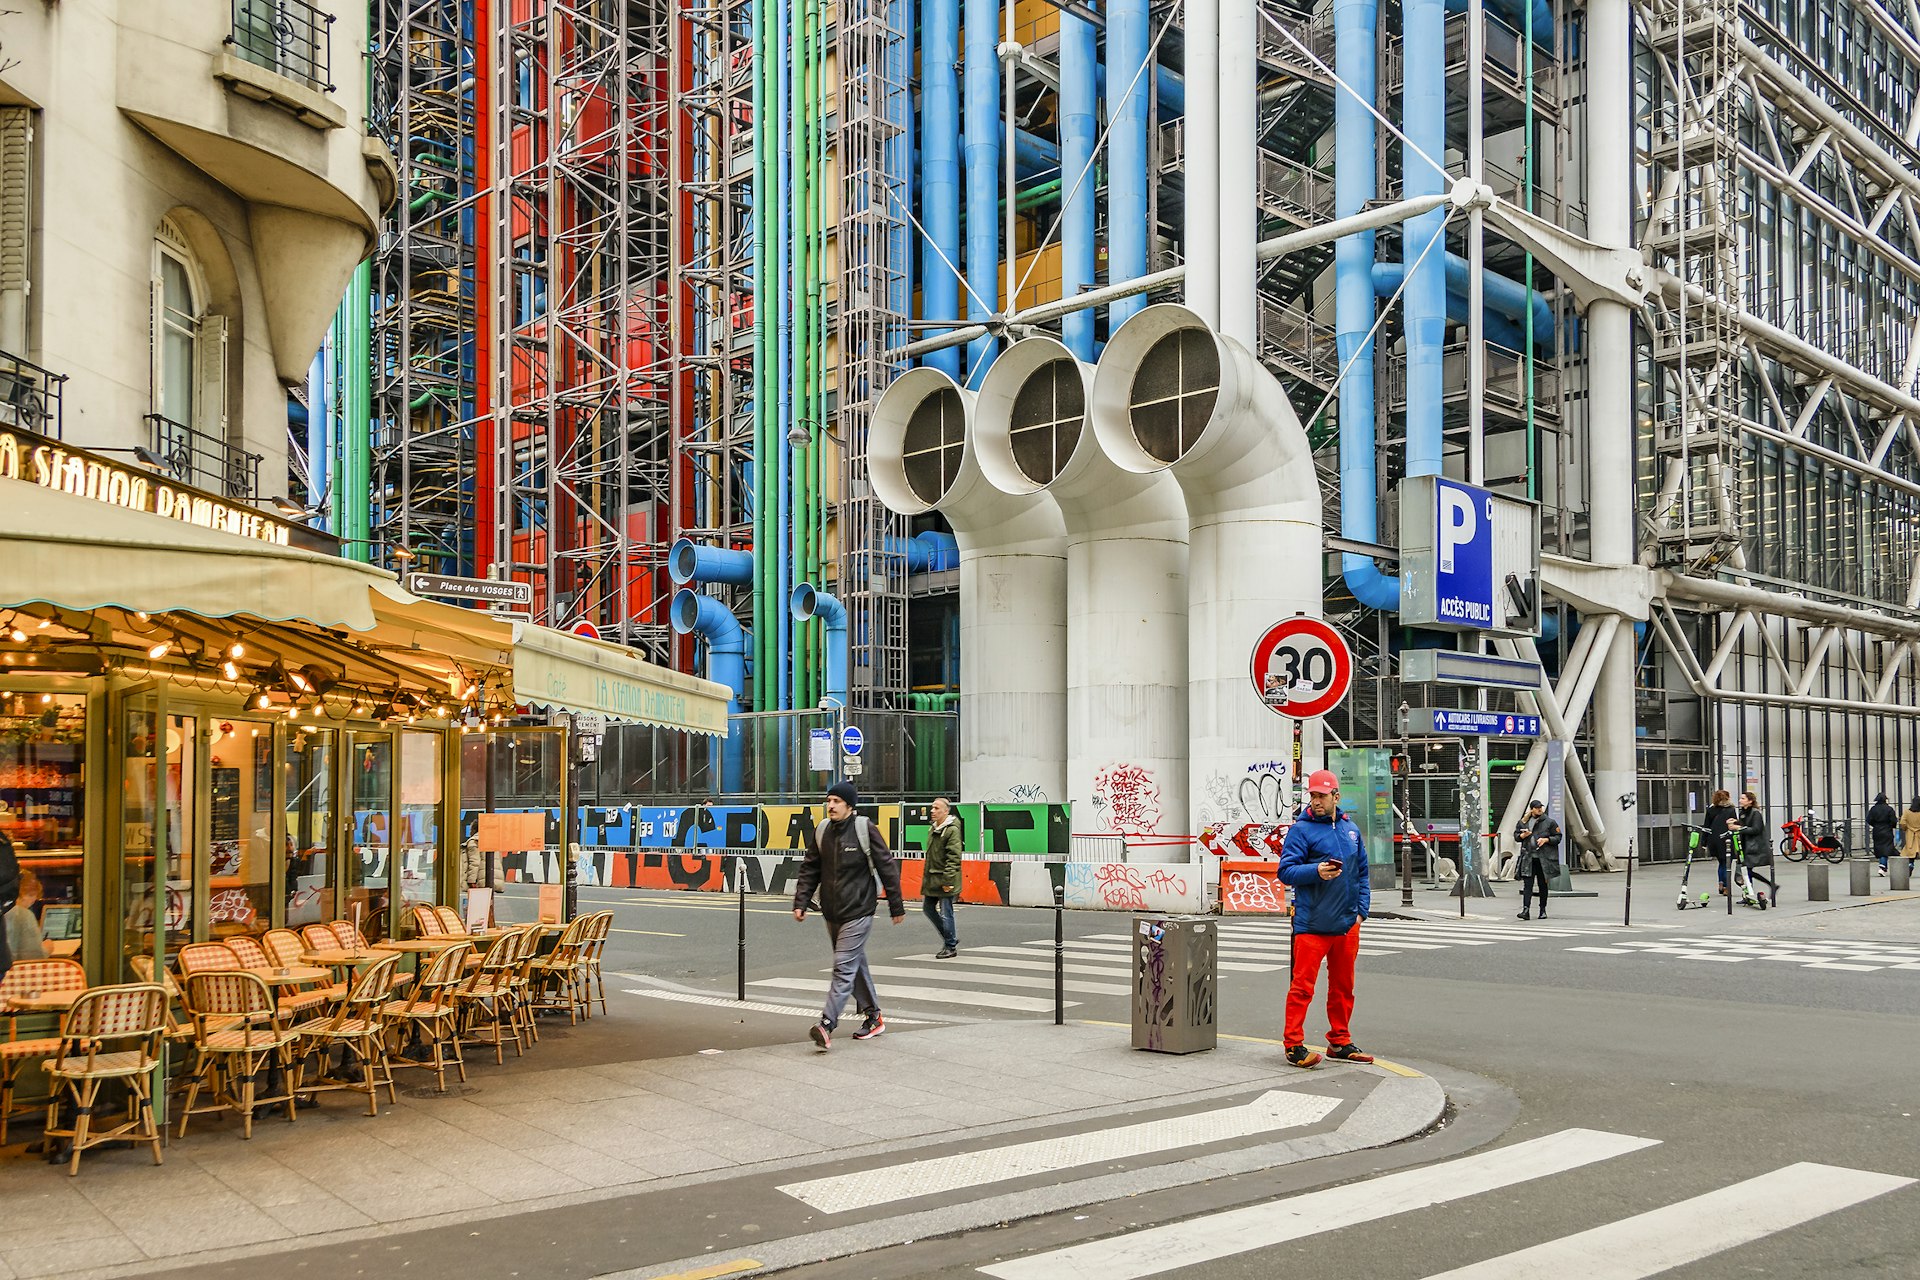 The Centre Pompidou, Paris